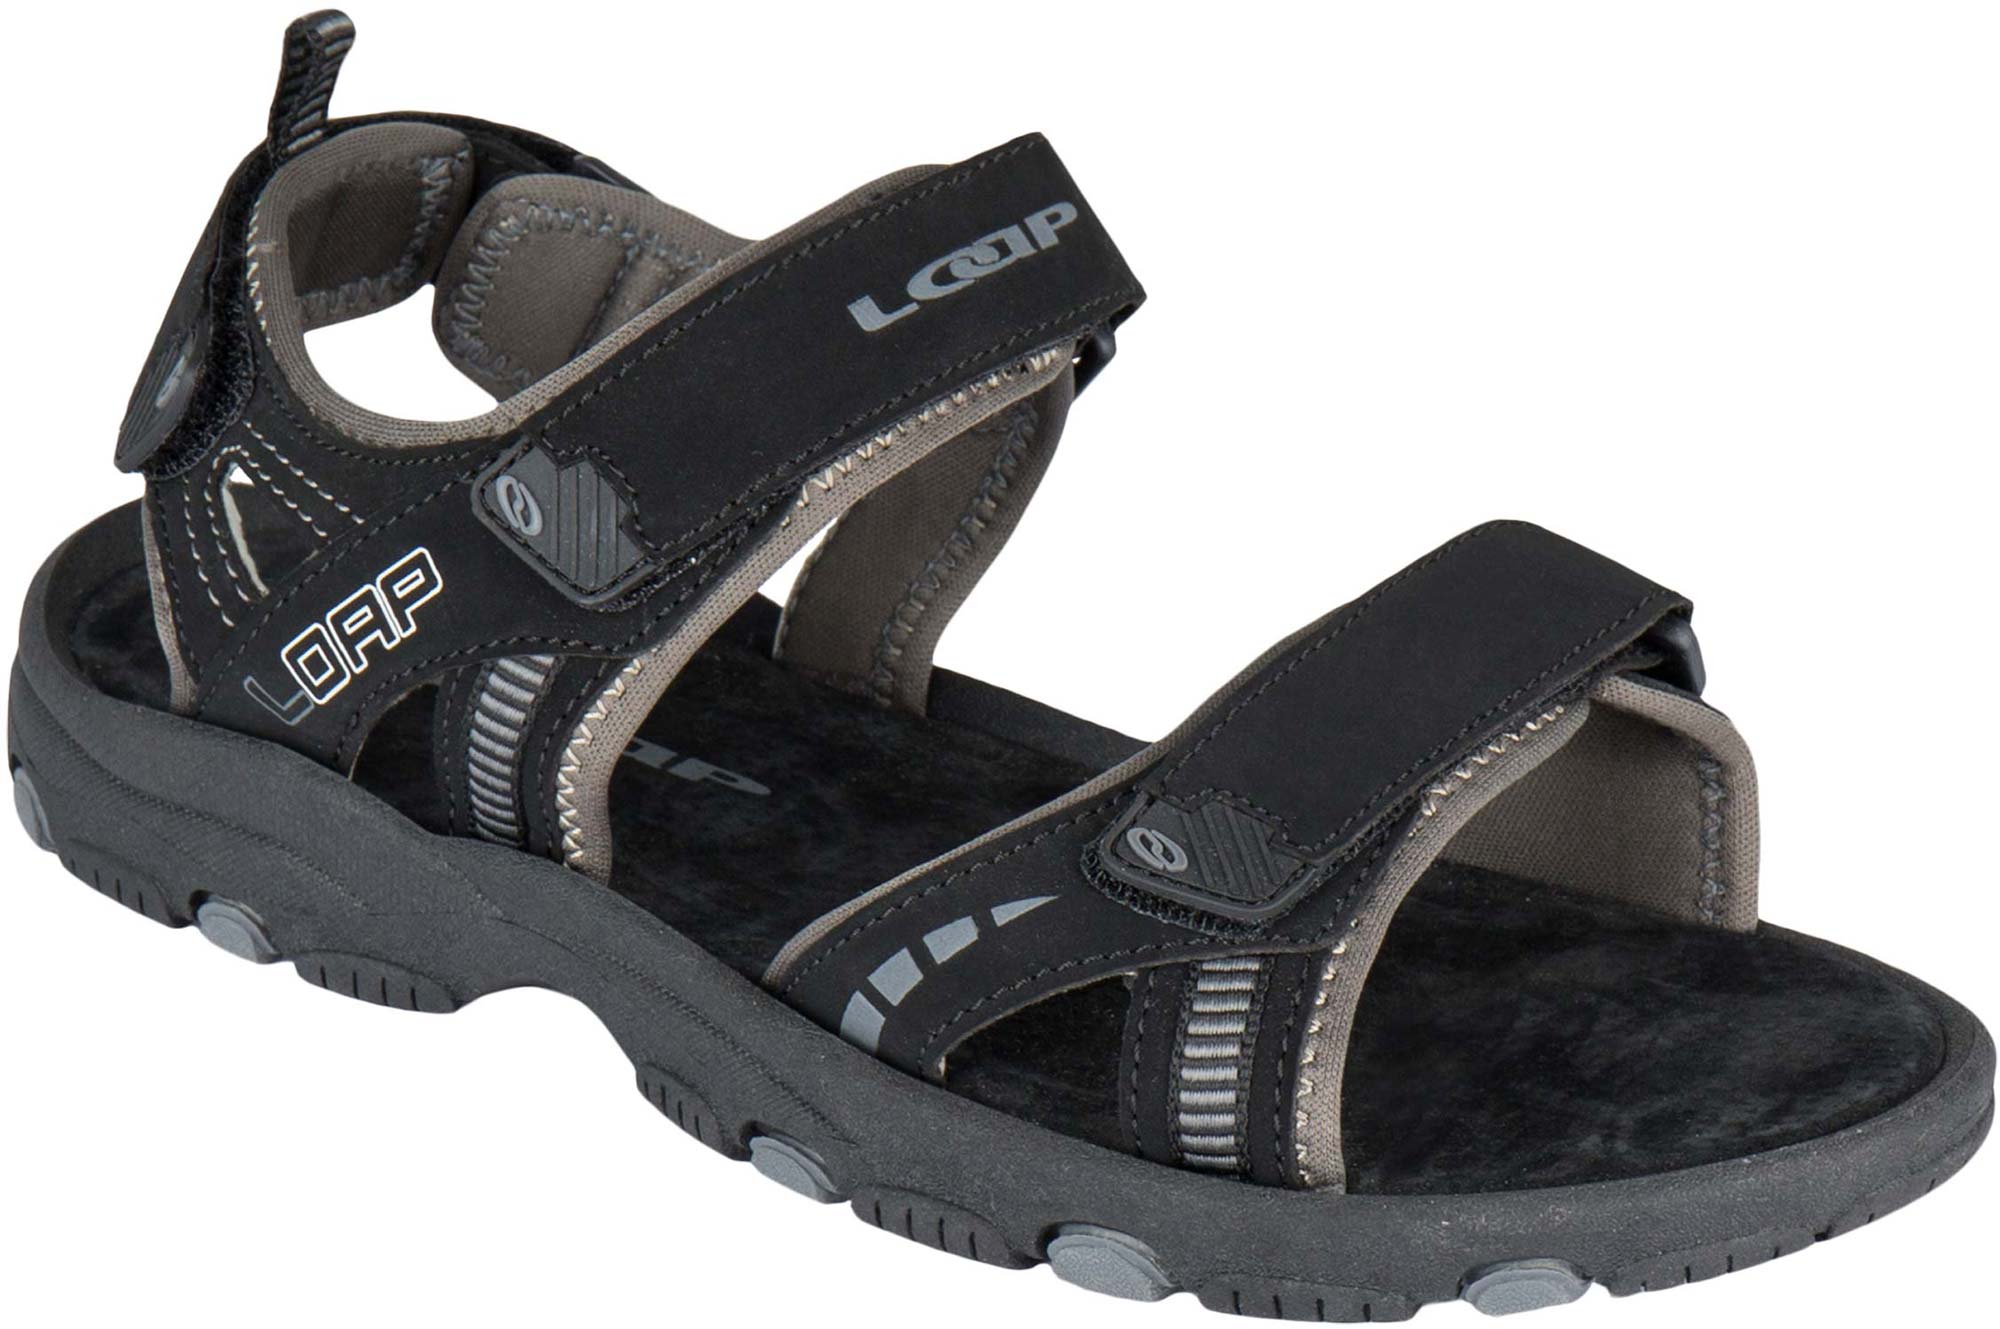 Men's summer sandals